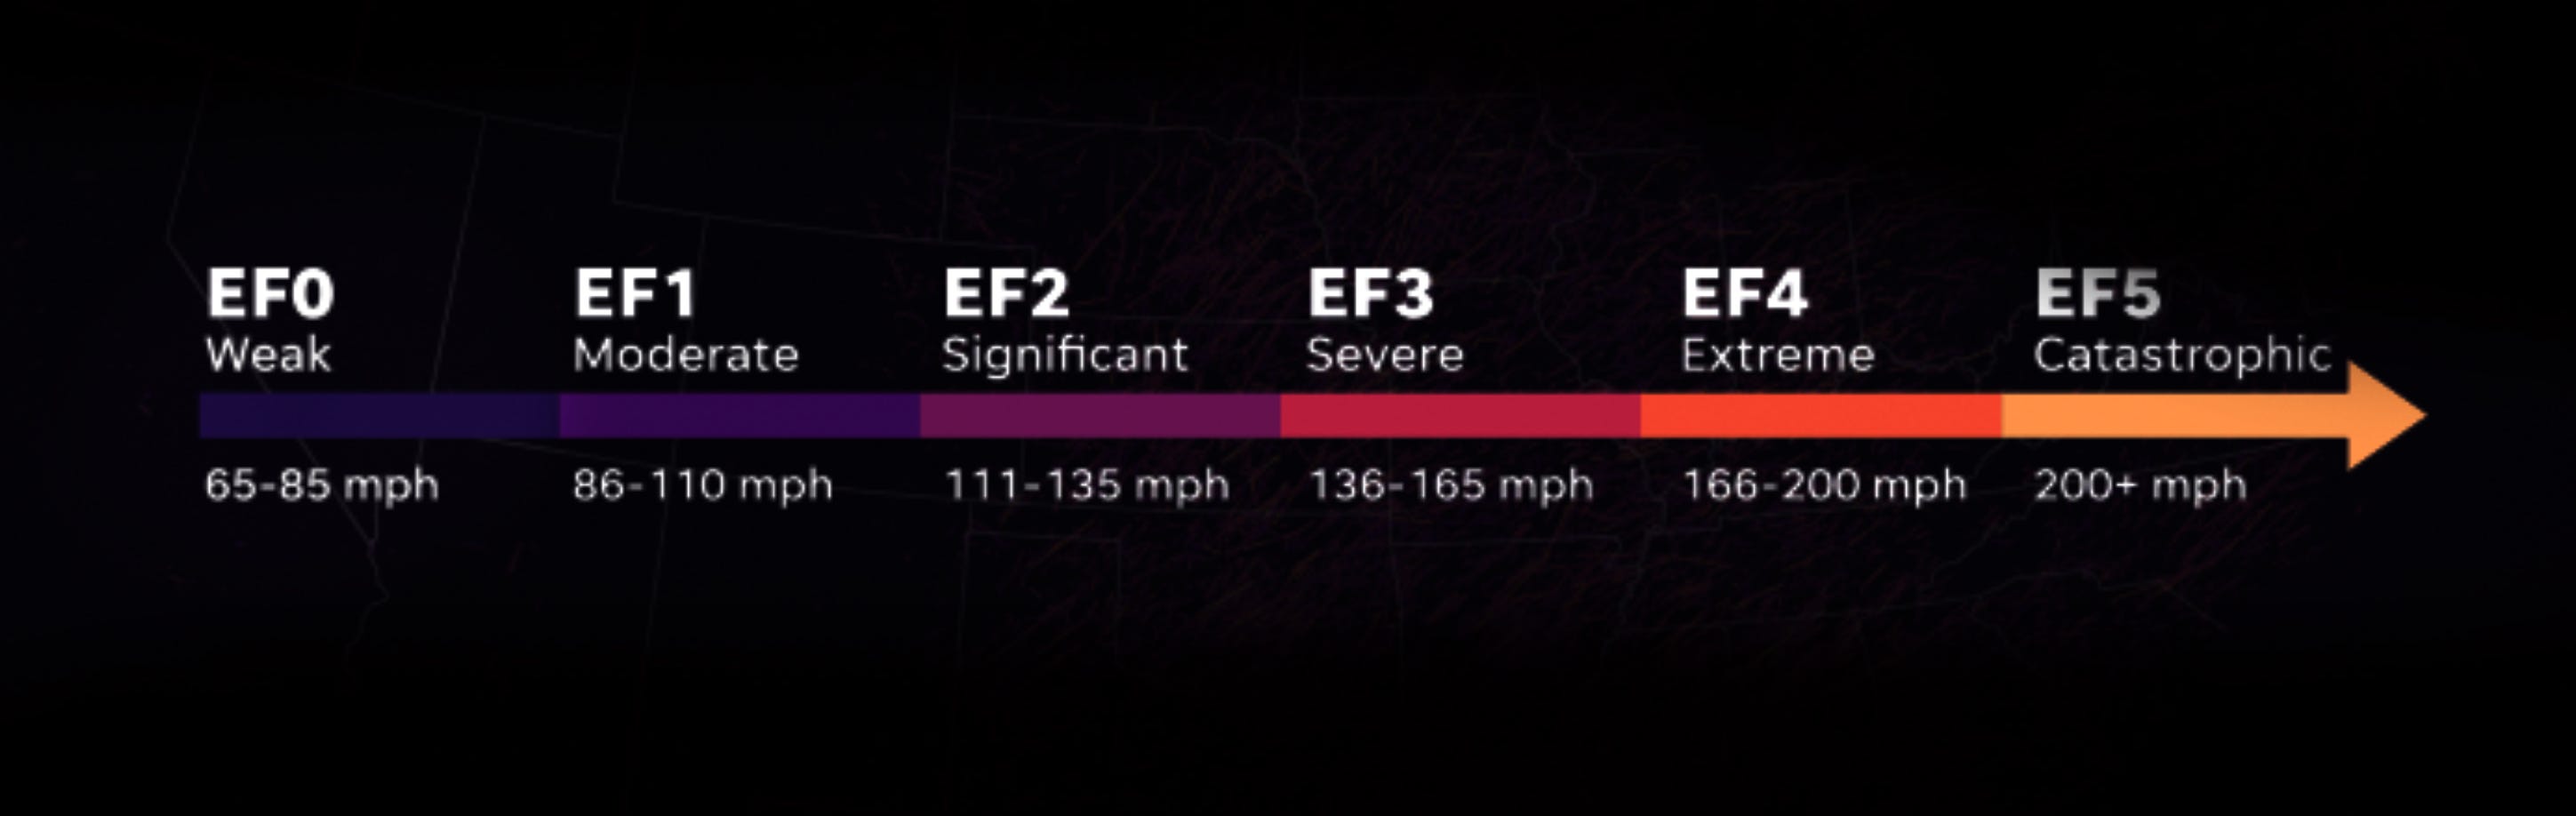 The Enhanced Fujita scale classifies tornadoes into six categories.